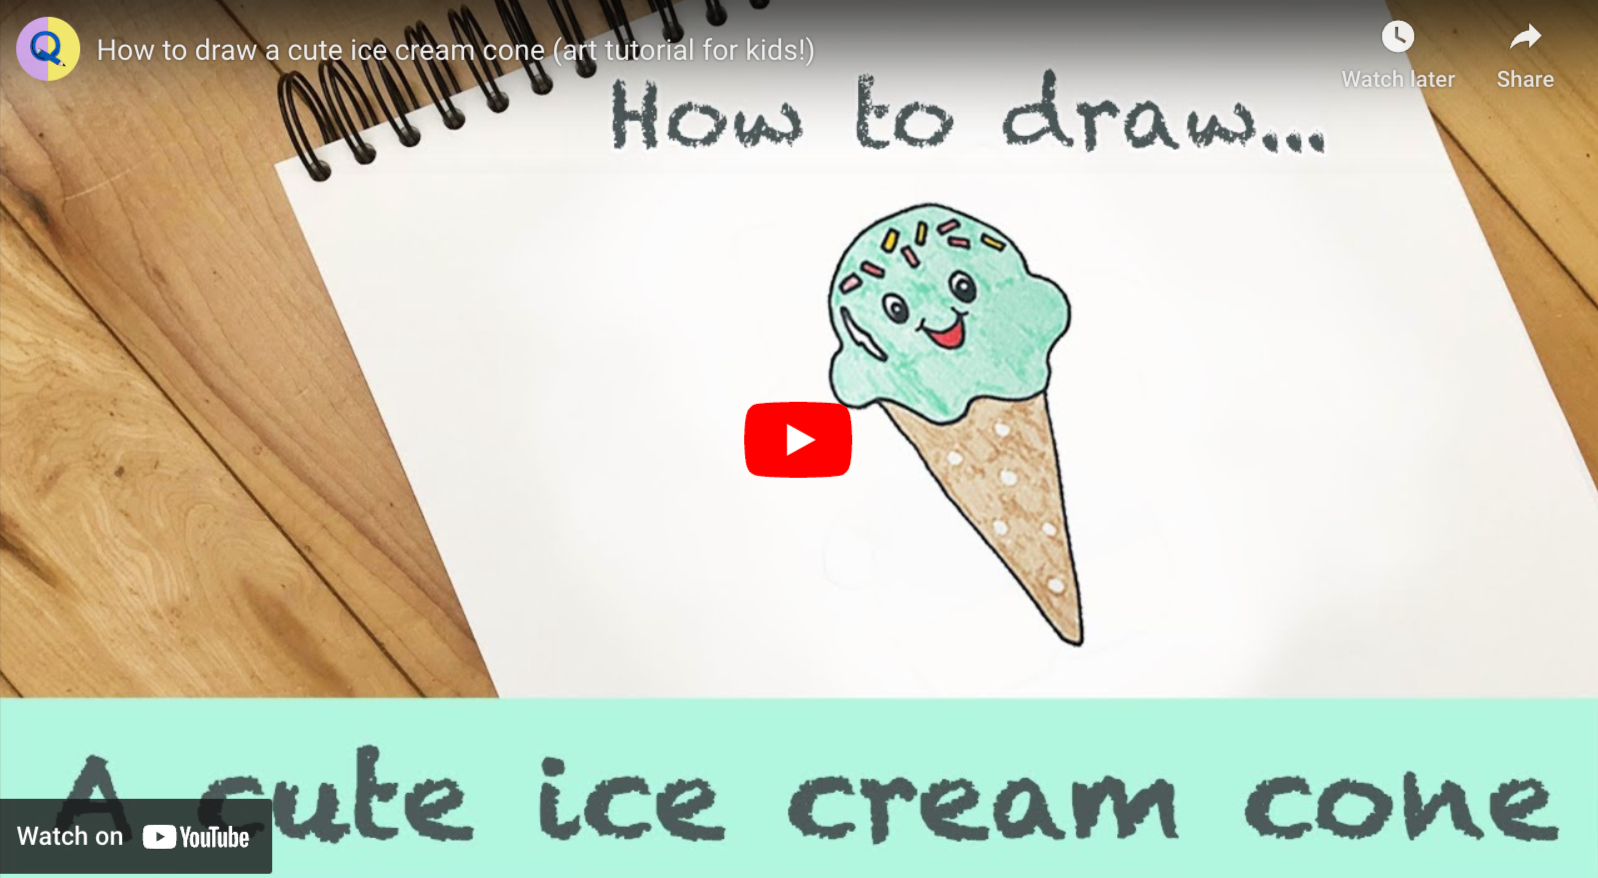 Cup of ice cream sketch icon. | Stock vector | Colourbox